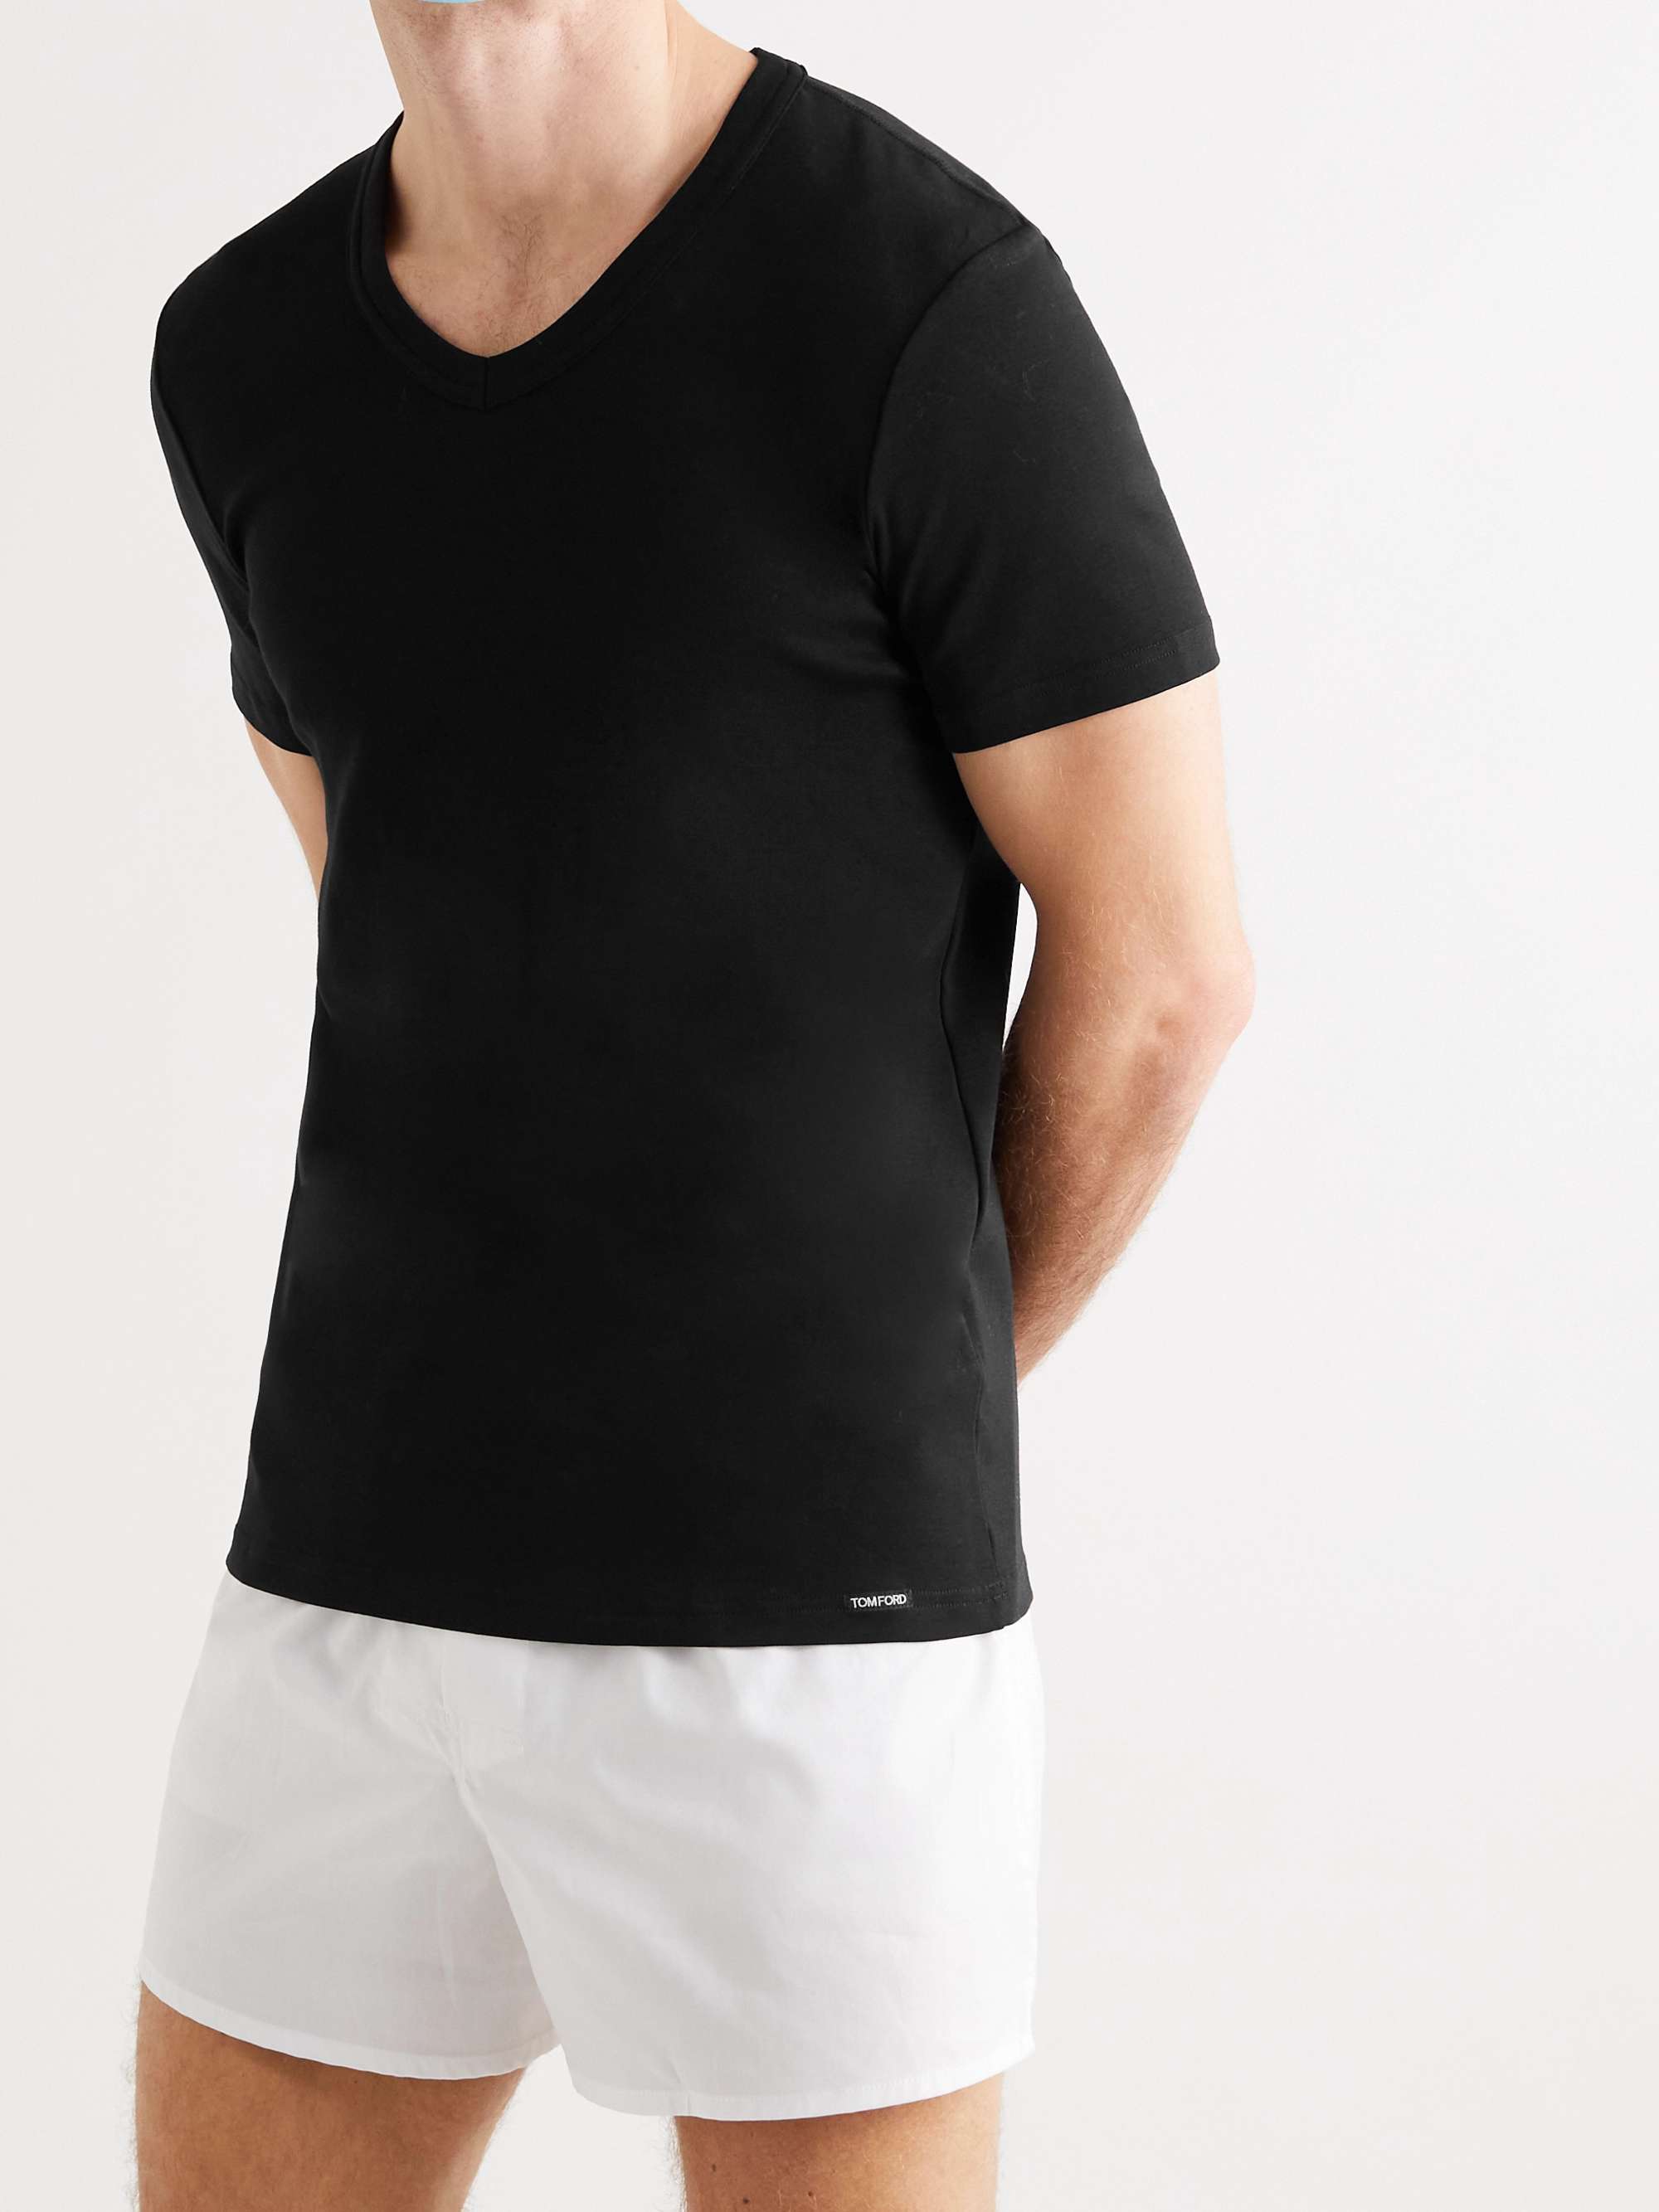 TOM FORD Slim-Fit Stretch-Cotton Jersey T-Shirt | MR PORTER